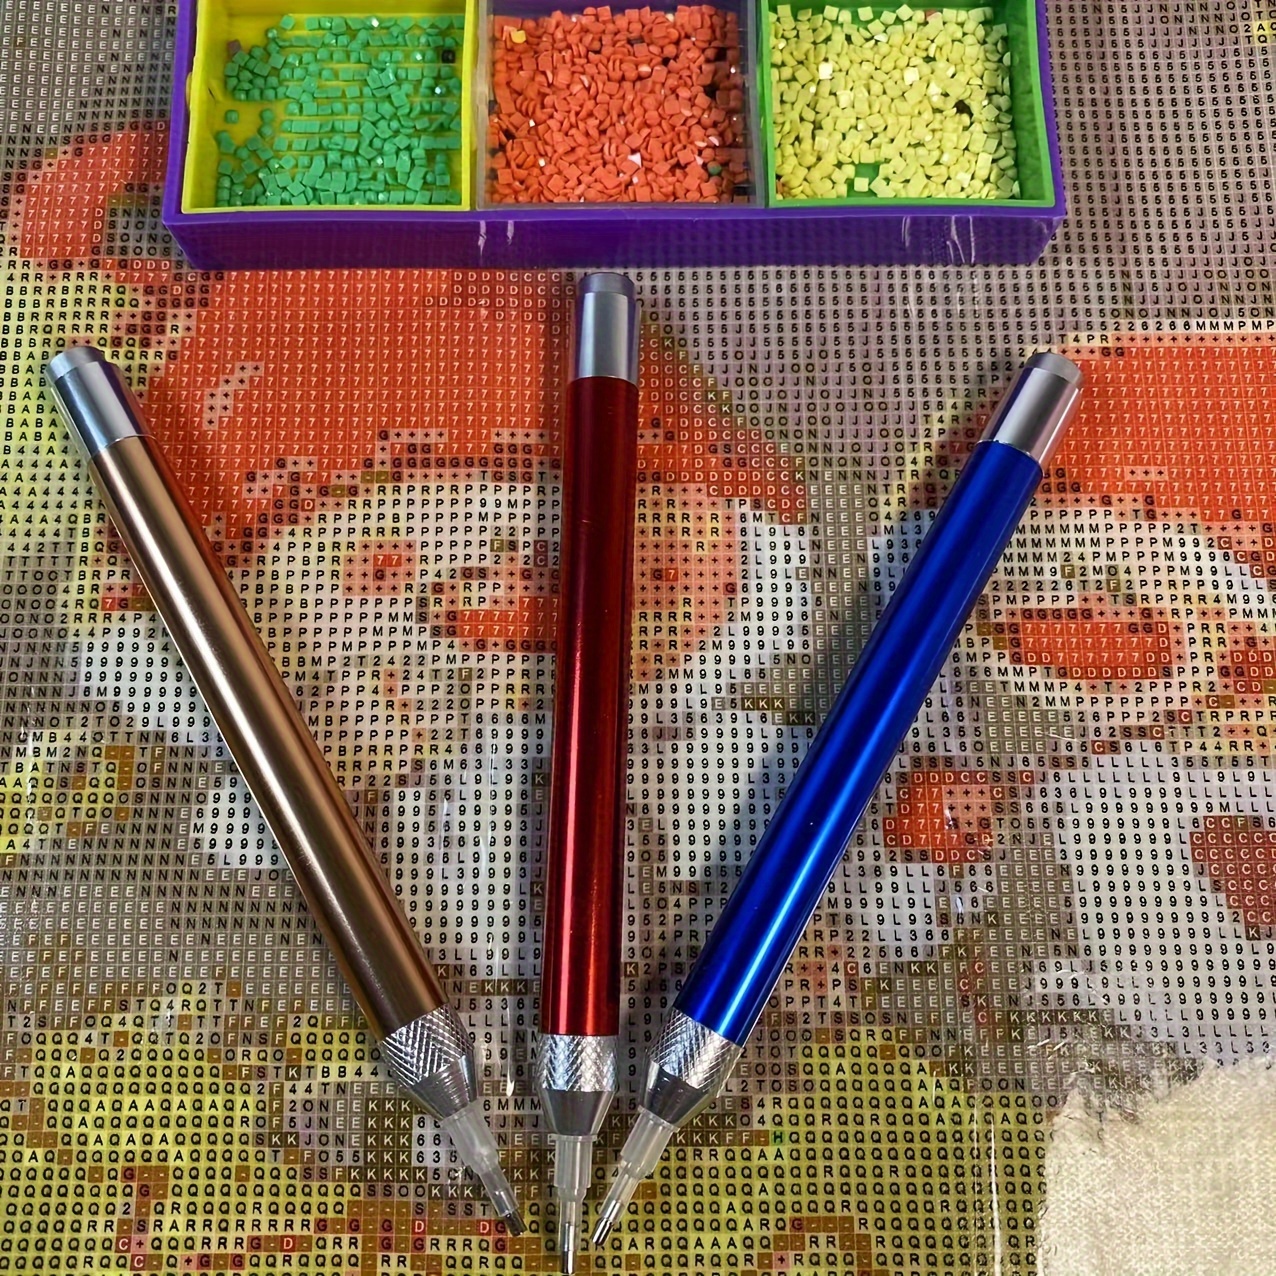 6 Pieces LED 5D Diamond Painting Pen Tools Point Drill Pens Lighting  Diamond Painting Tools for 5D DIY Painting Diamonds Accessories